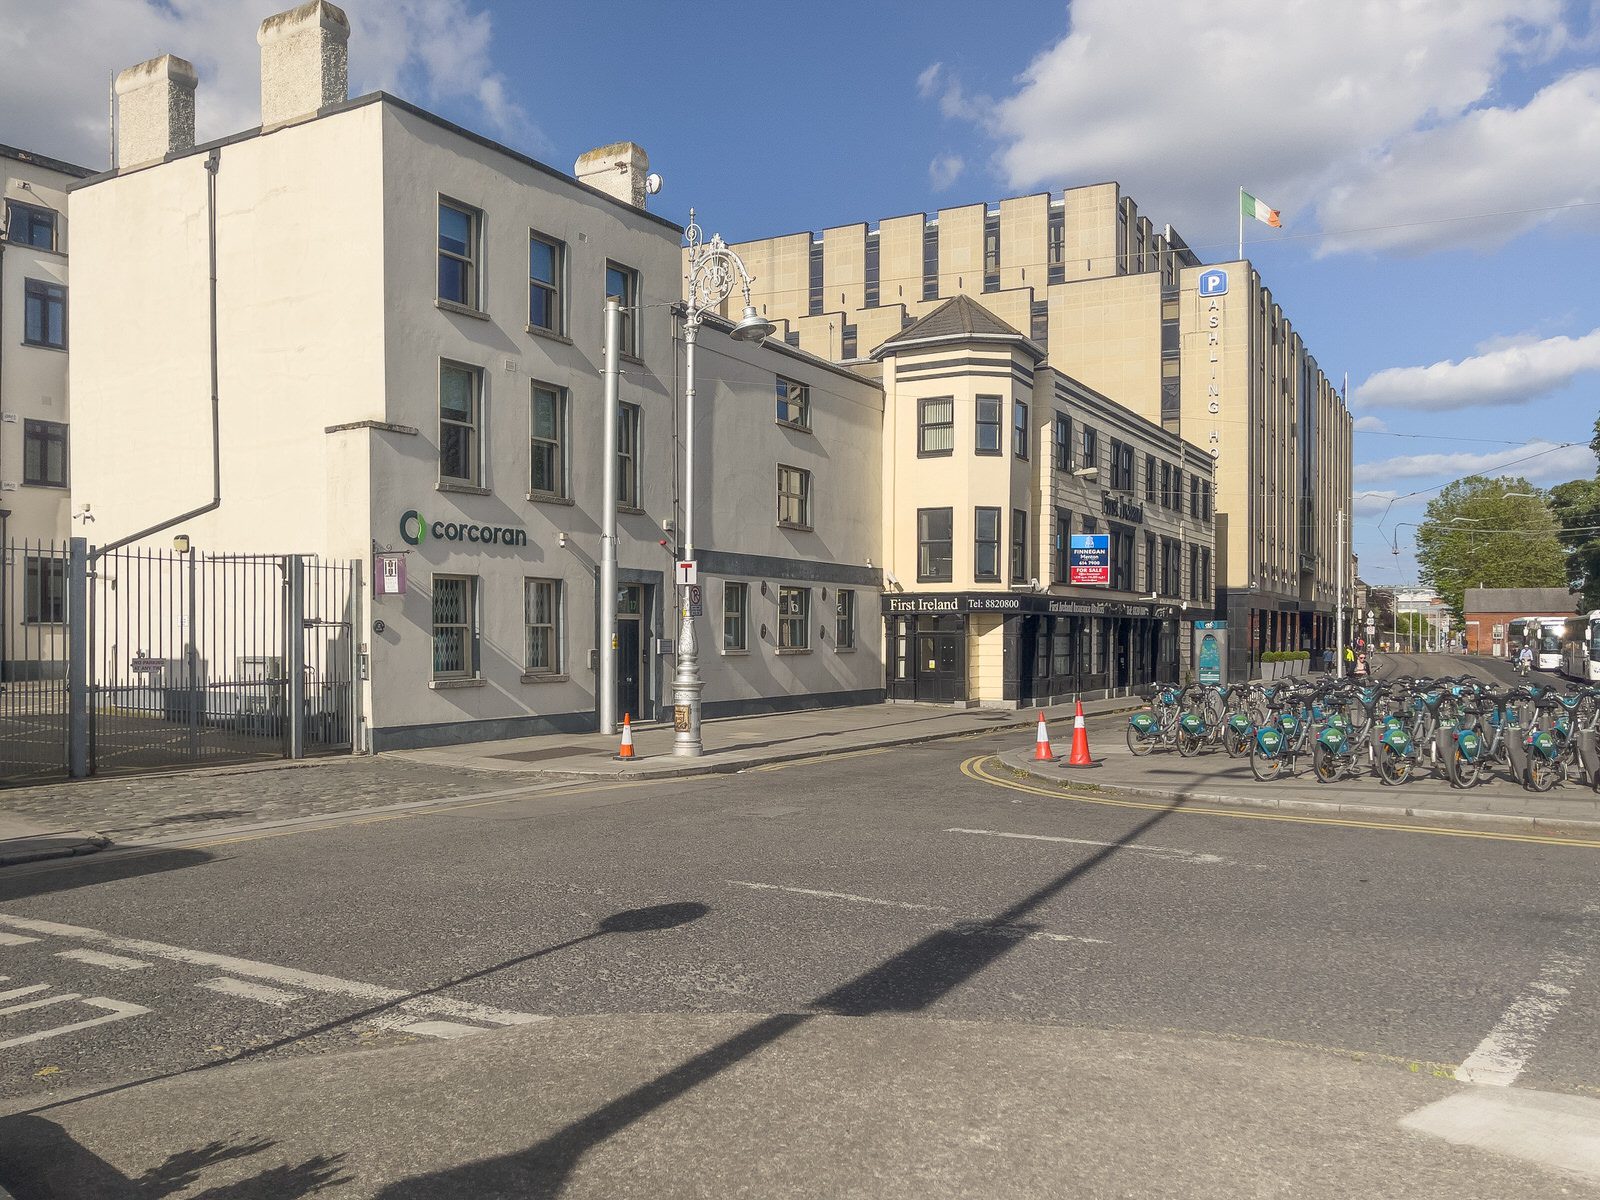 PARKGATE STREET [A GATEWAY TO DUBLIN'S HISTORY AND PARKLANDS]-234210-1